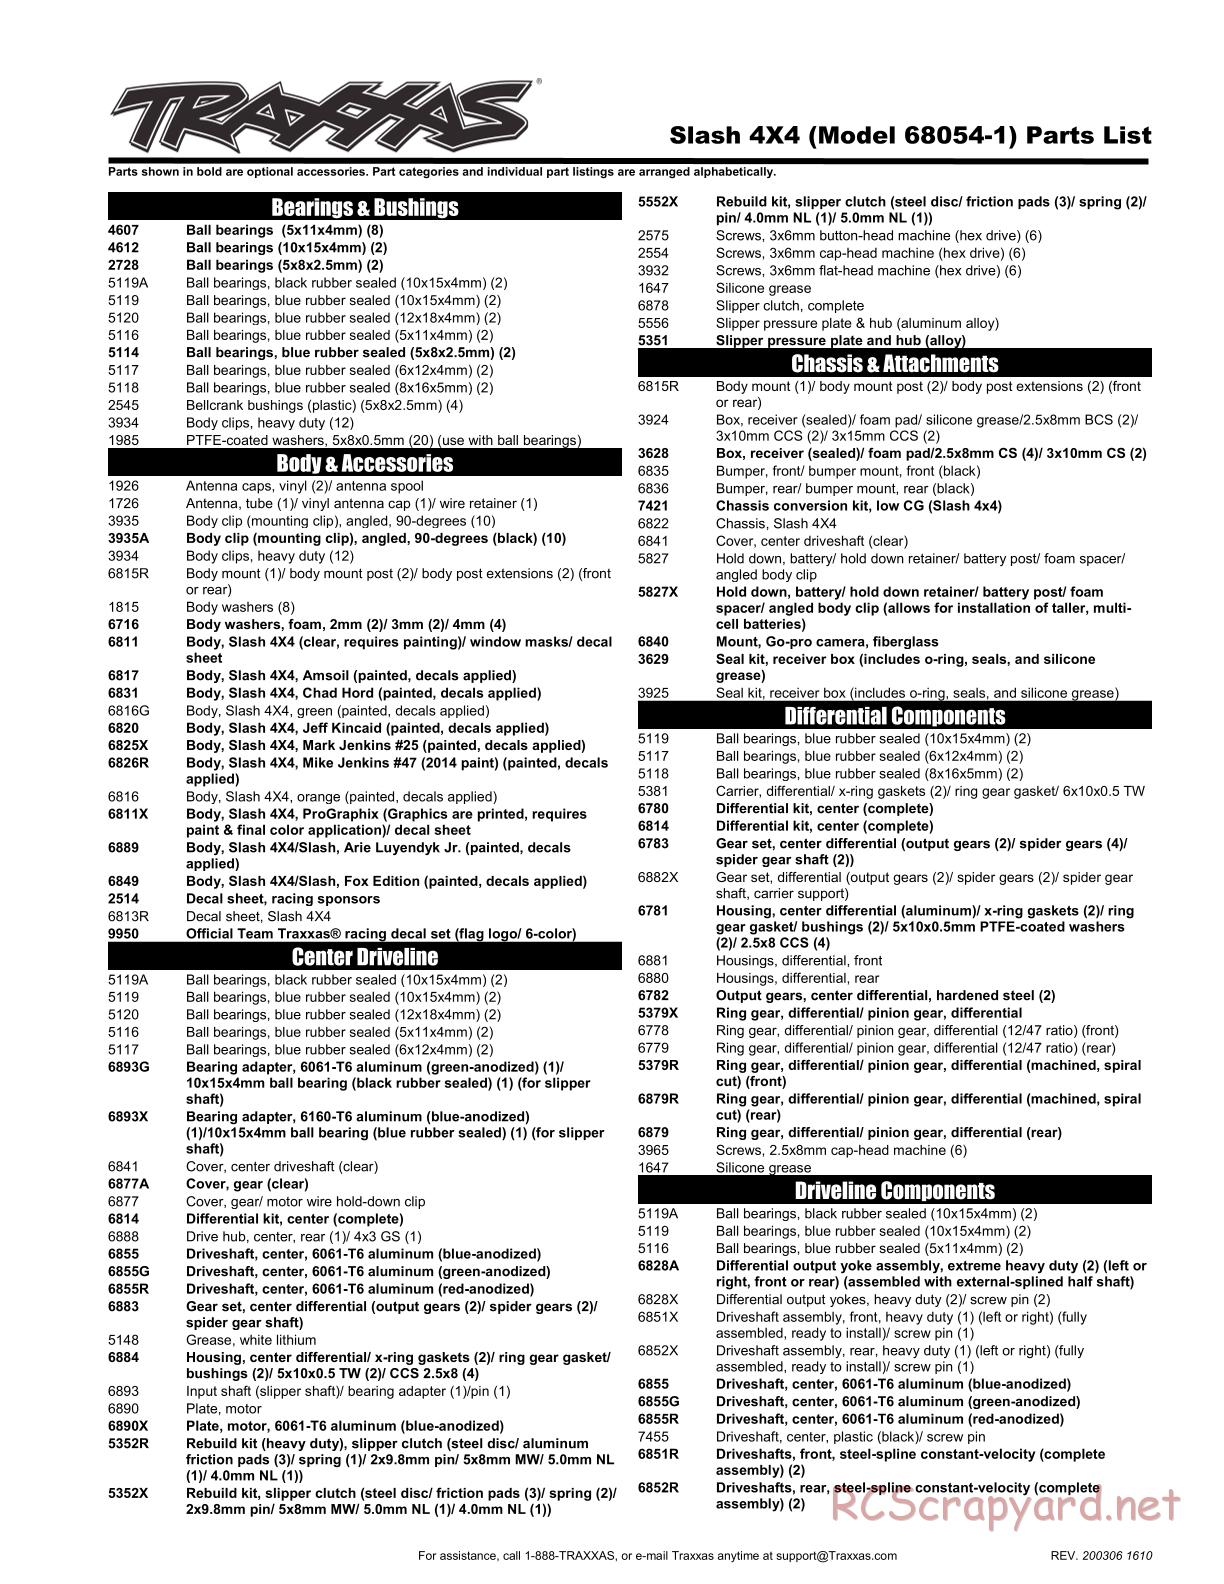 Traxxas - Slash 4x4 Brushed - Parts List - Page 1